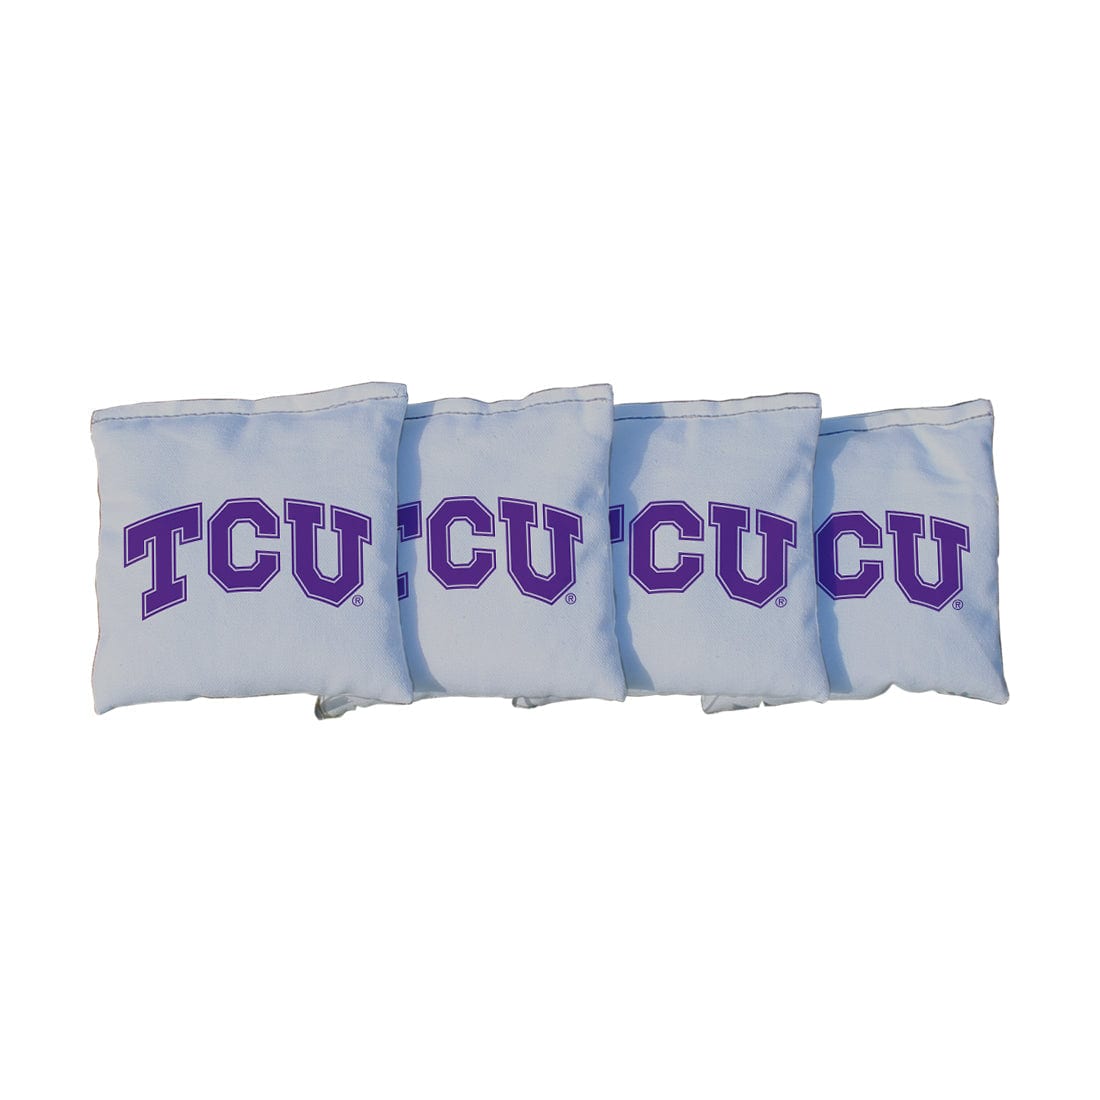 Texas Christian University TCU Horned Frogs Grey Cornhole Bags